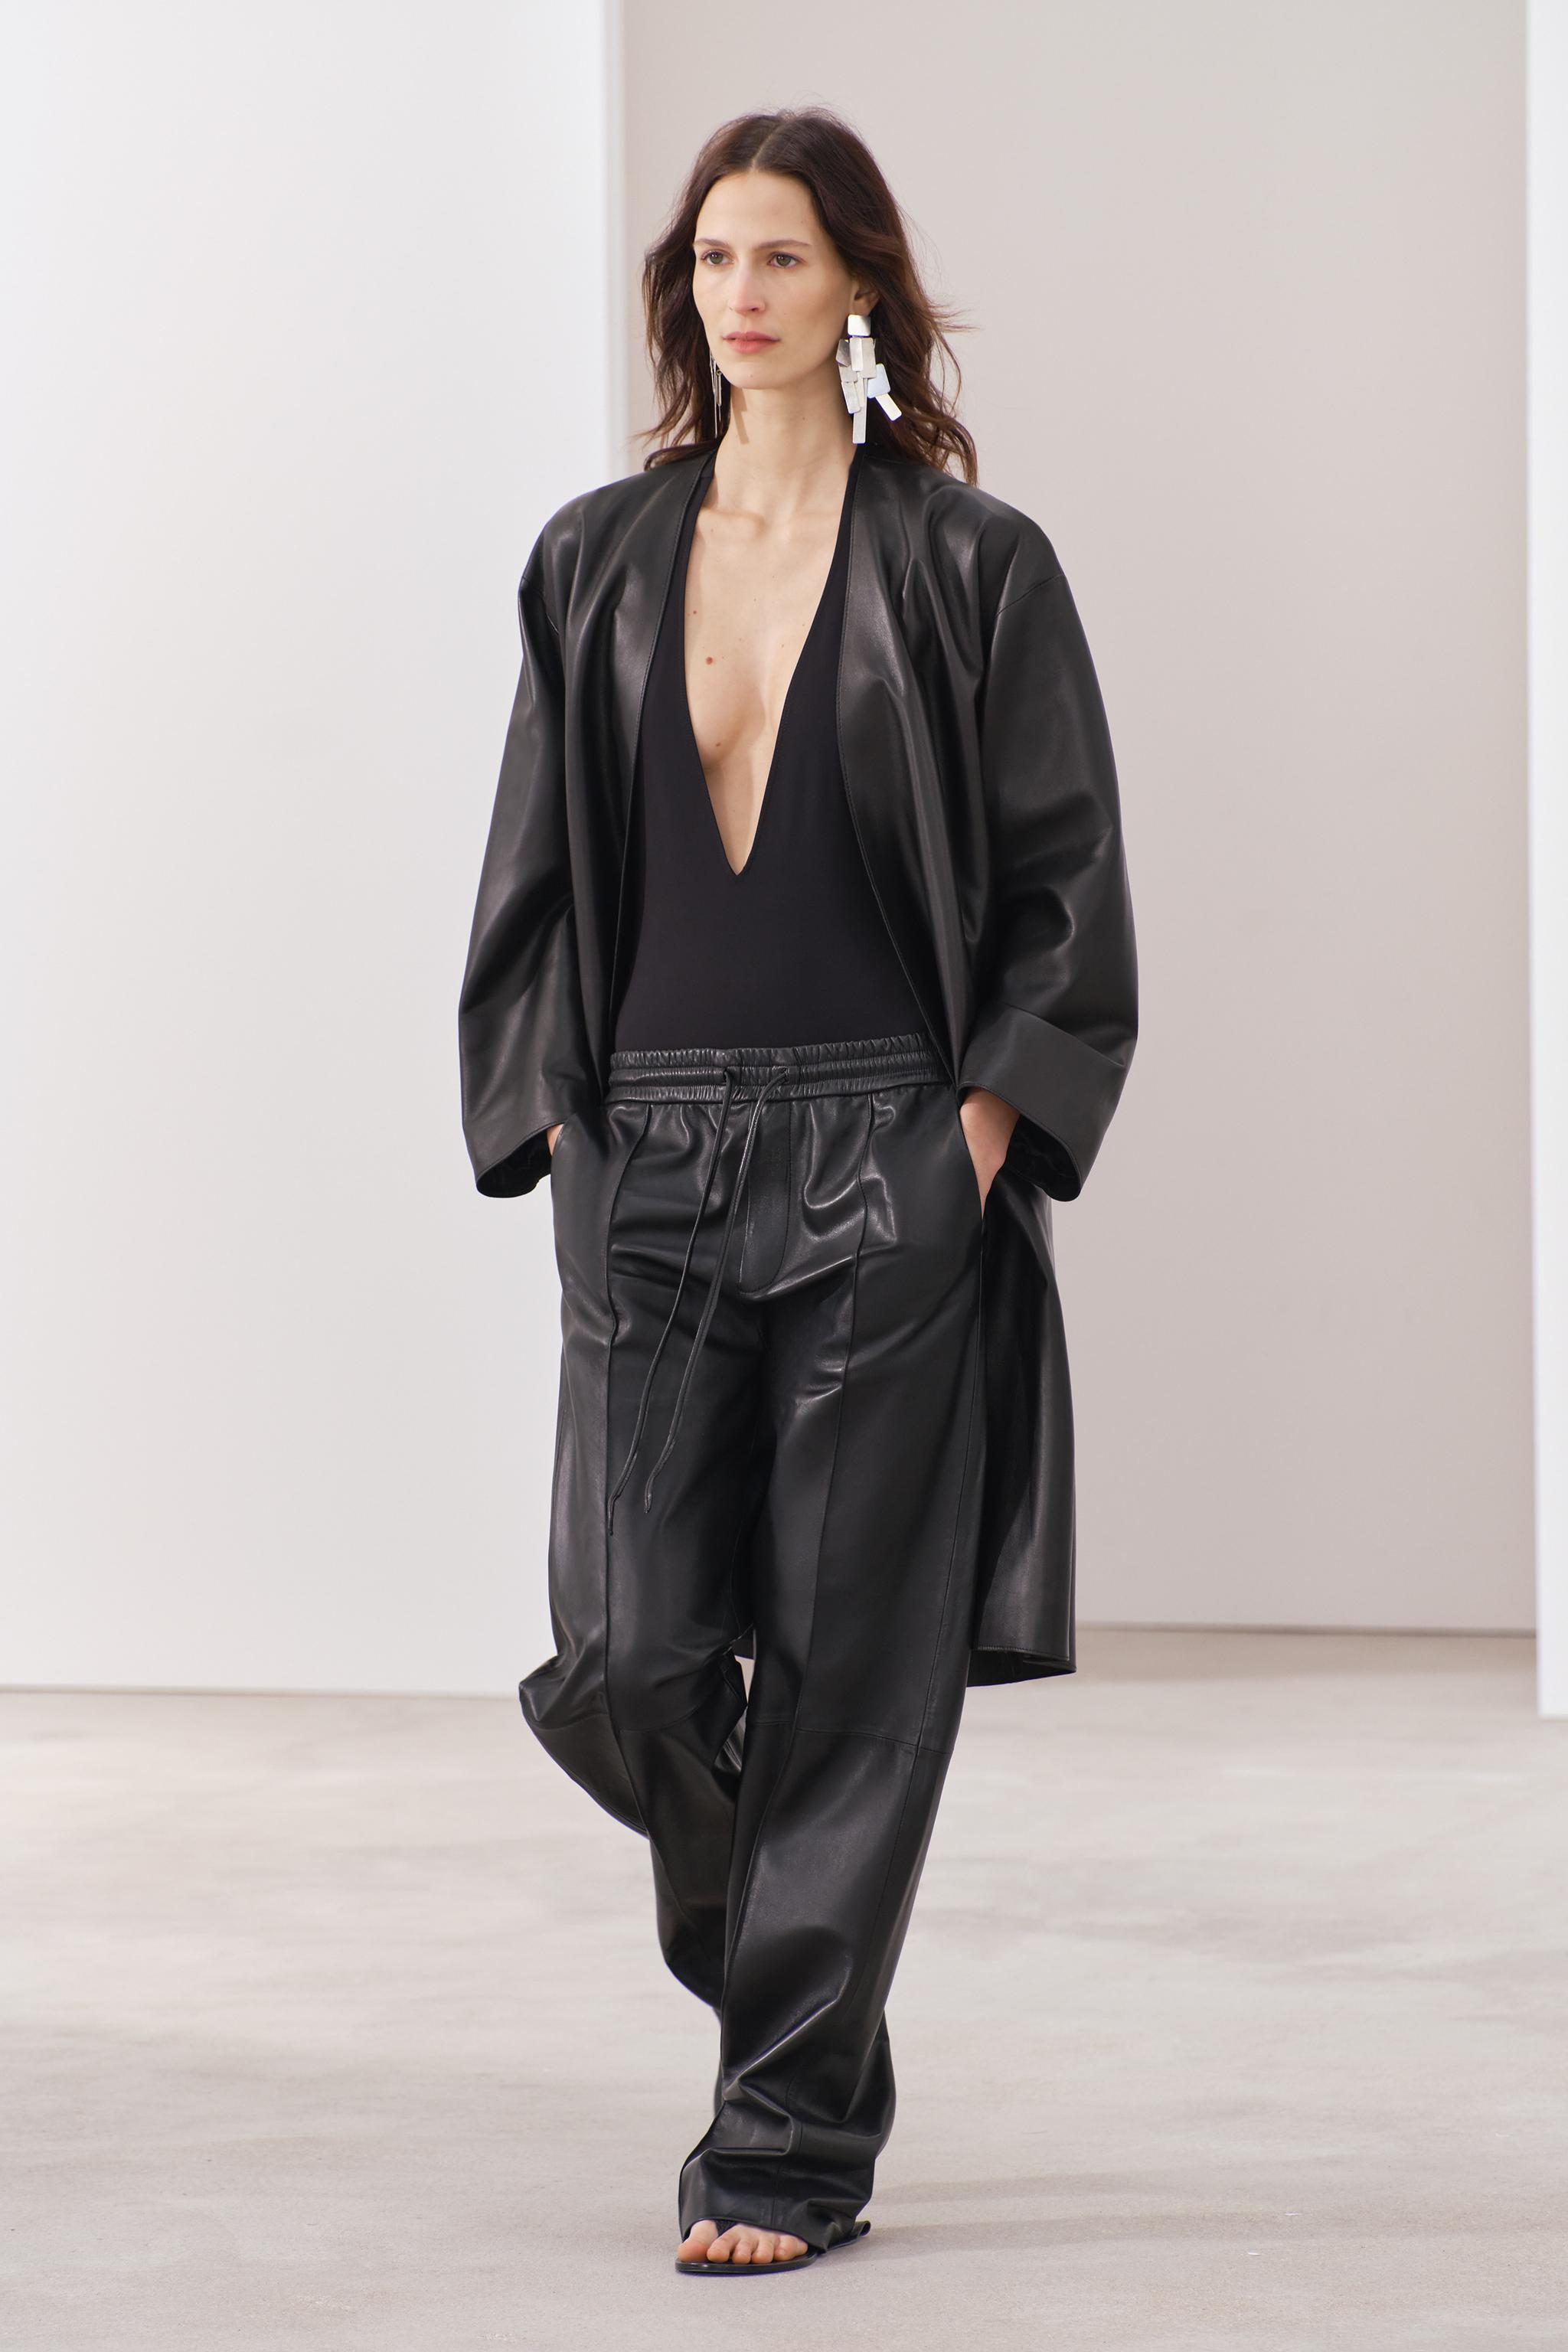 Zara Women Croco Animal Effect Faux Leather Trousers Black 4369/254 